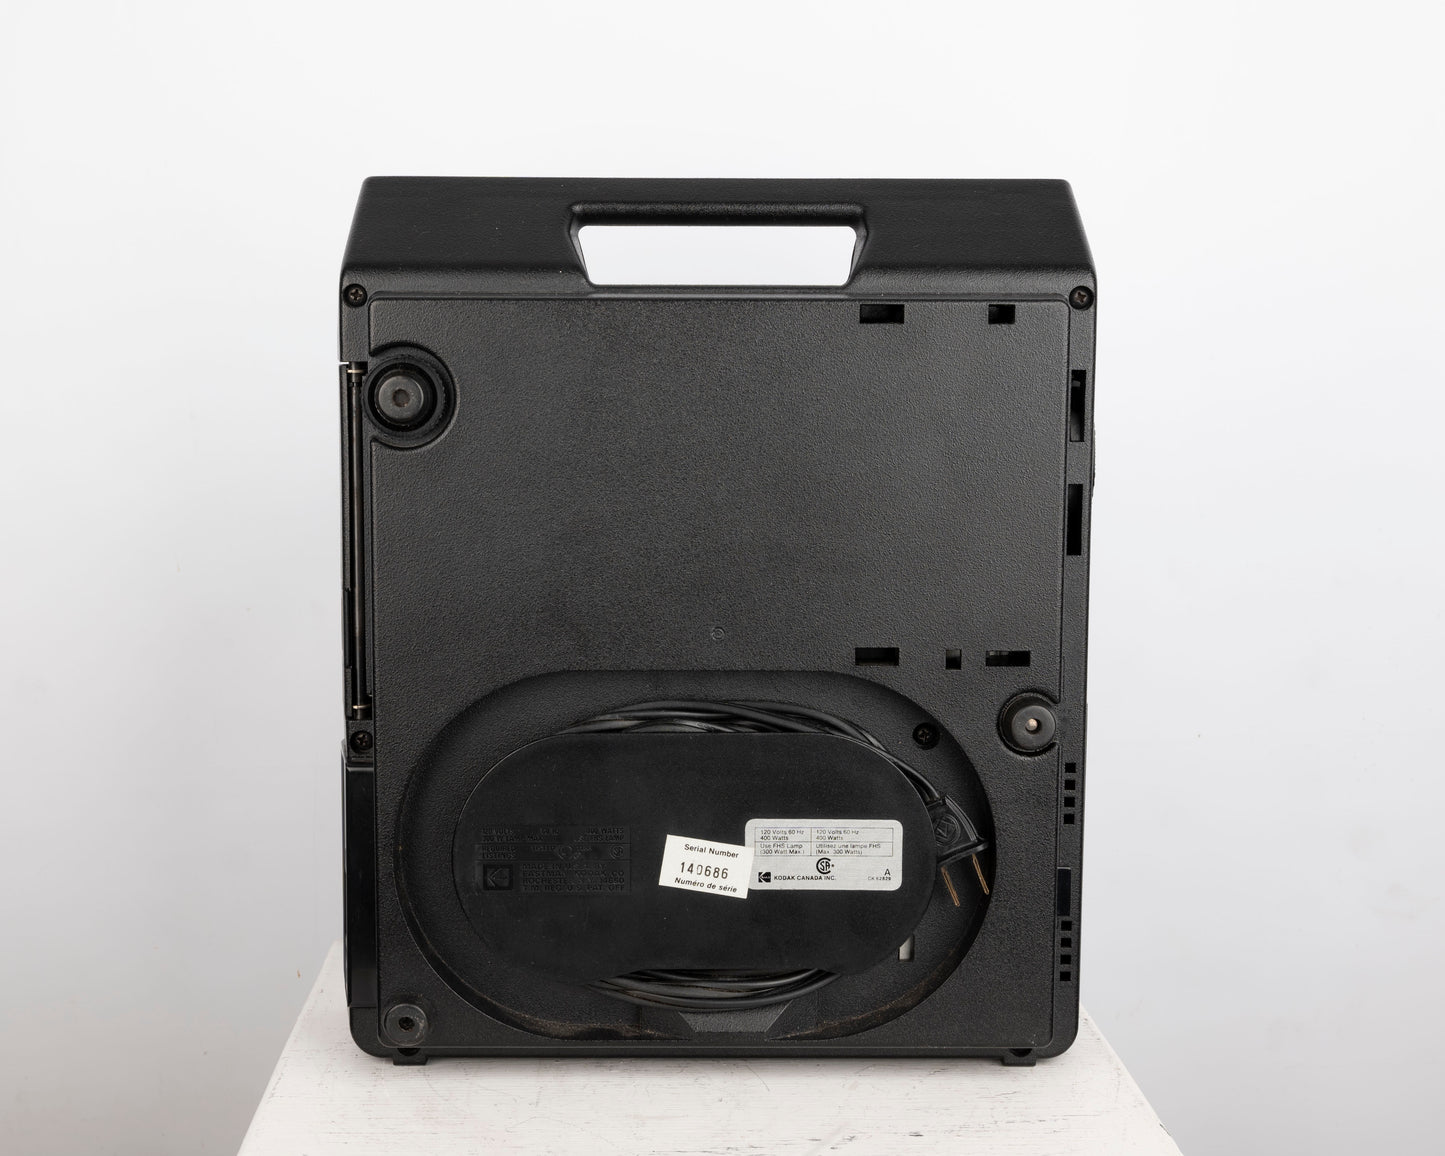 Projecteur de diapositives Kodak Carousel 4400 35 mm avec objectif Ektanar C 102 mm f2.8 (série 140686)